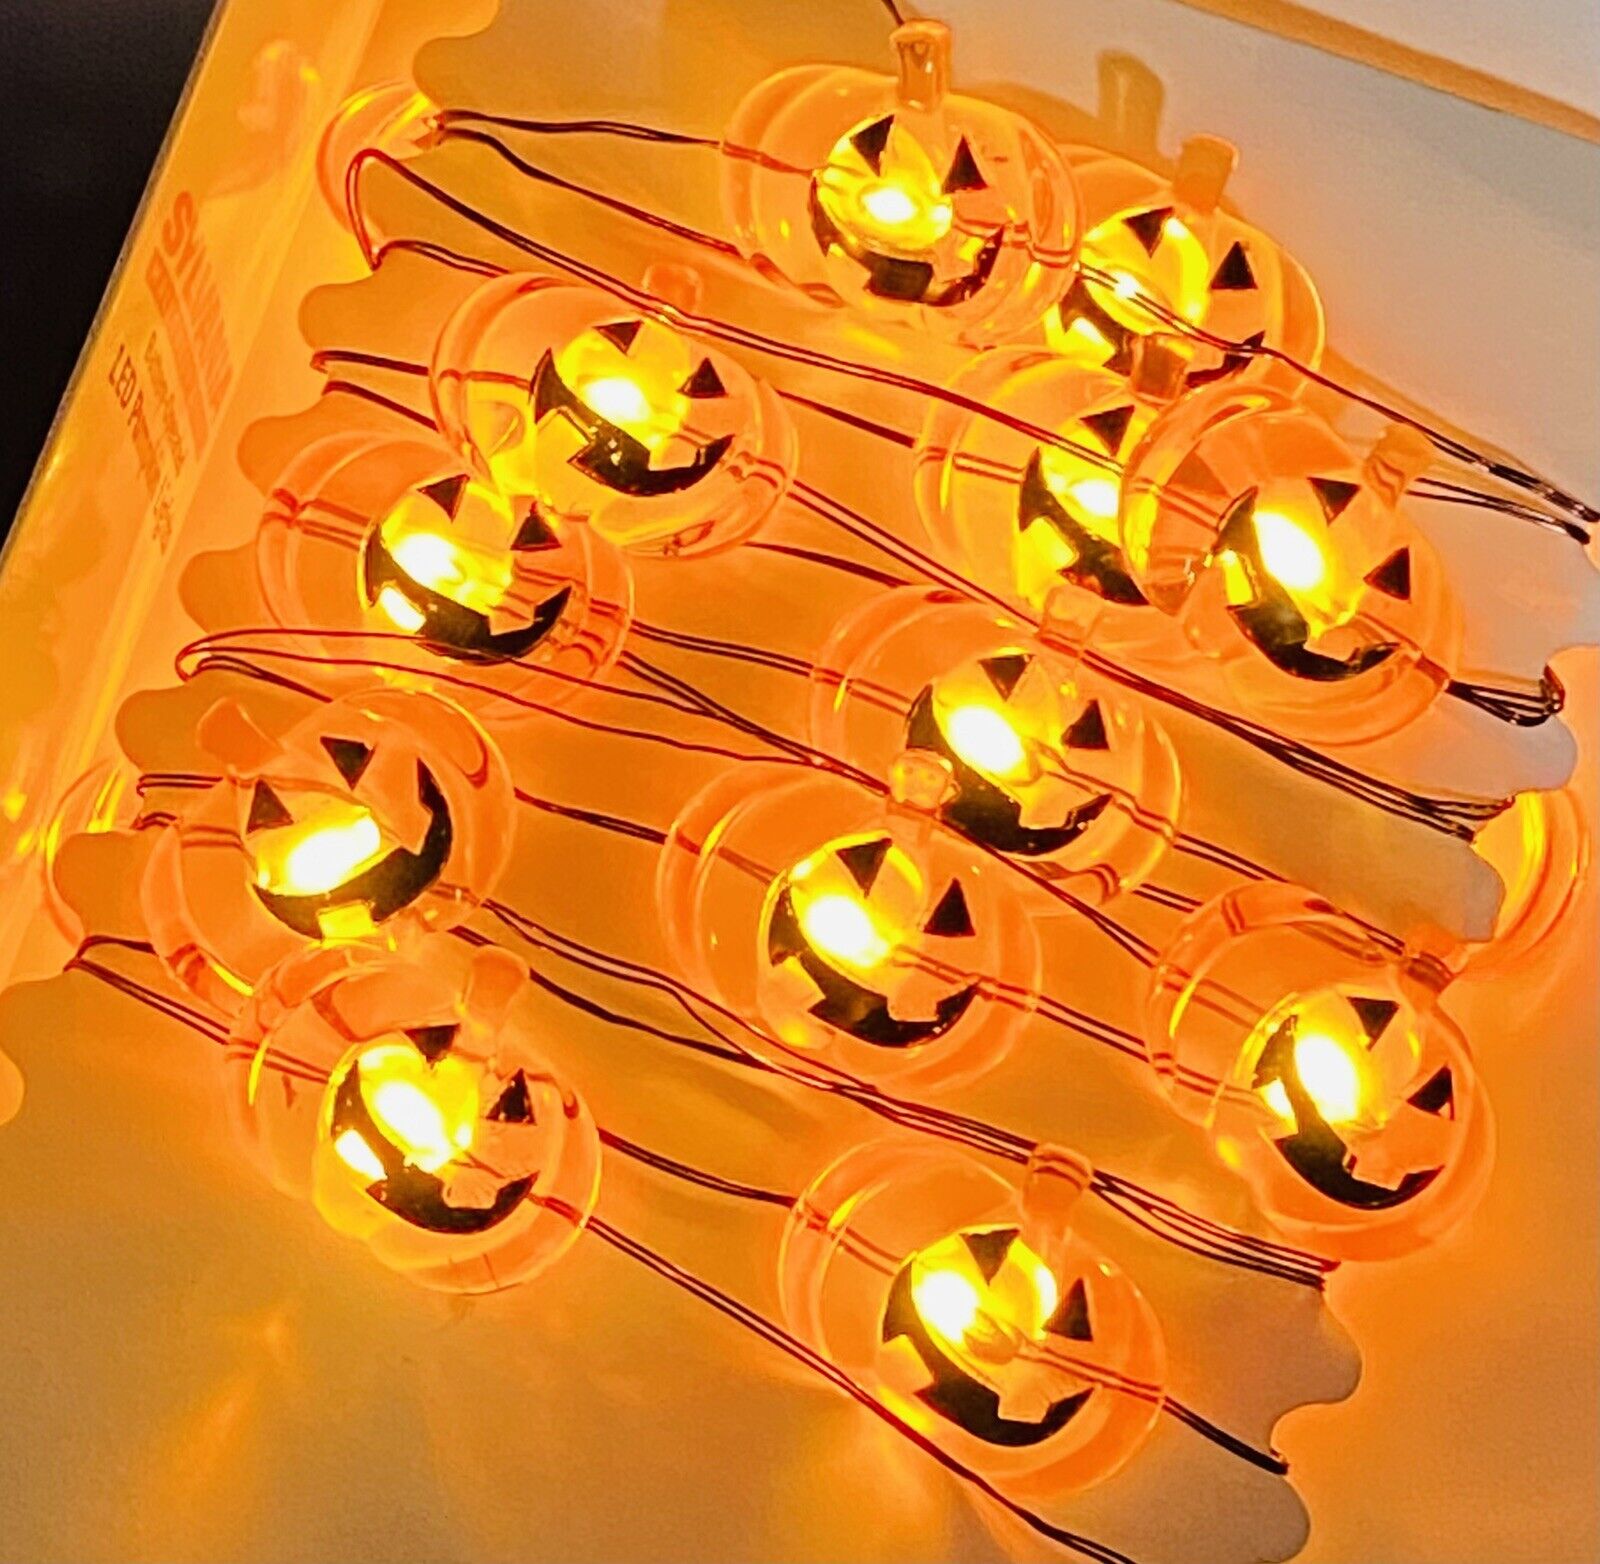 Pumpkin Lights Sylvania Led Halloween Series Battery Operated Timer 25 Light Set